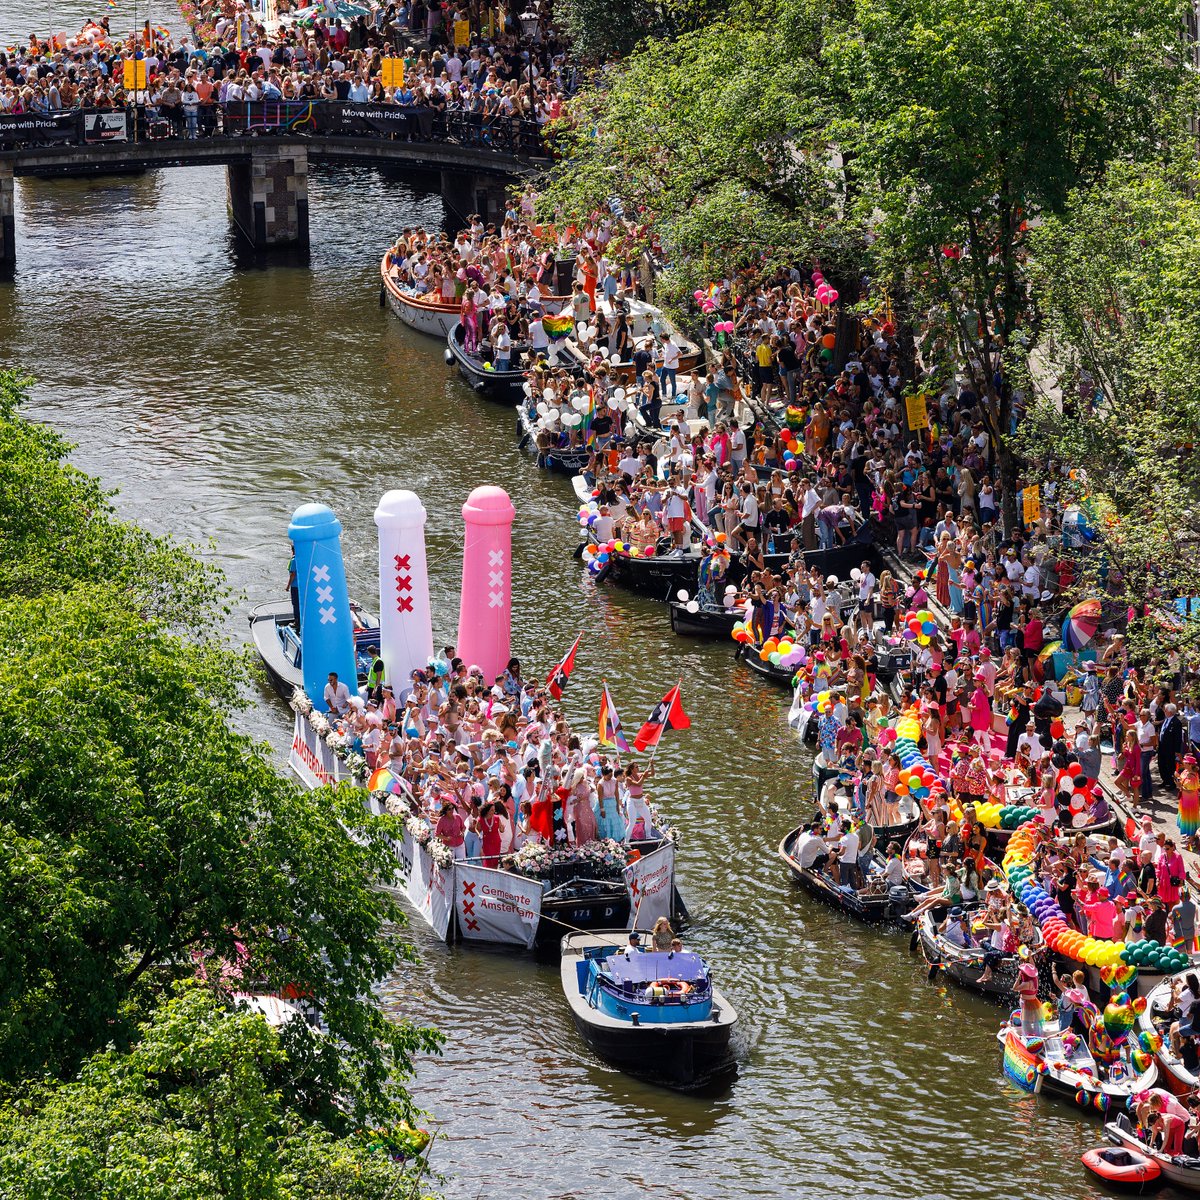 @AmsterdamNL's photo on #prideamsterdam